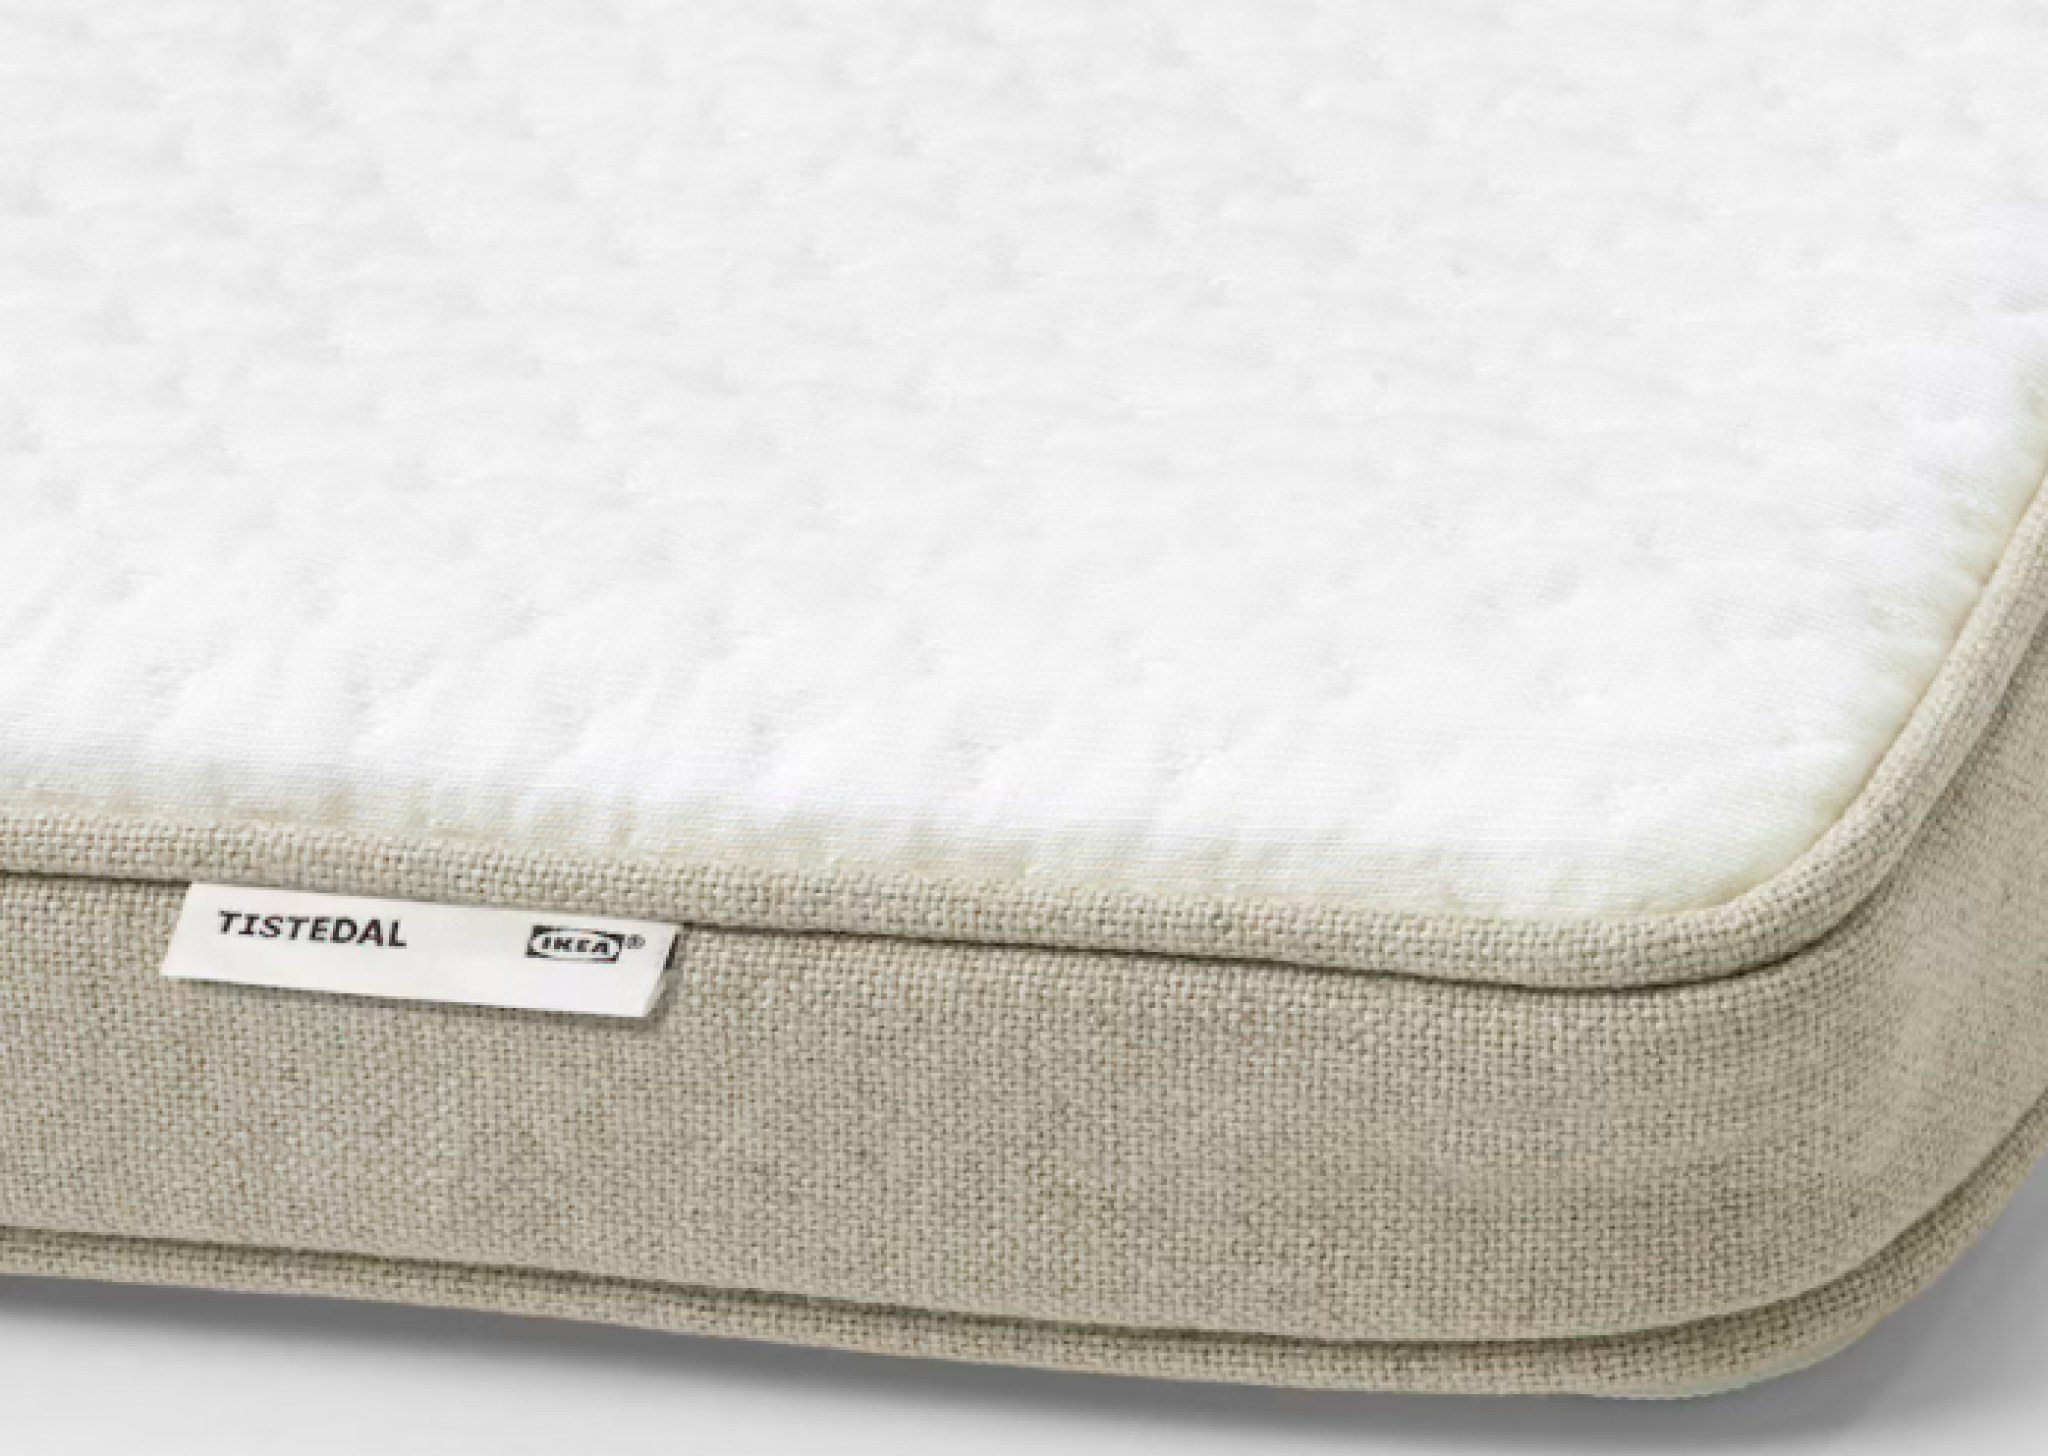 ikea tistedal mattress pad review